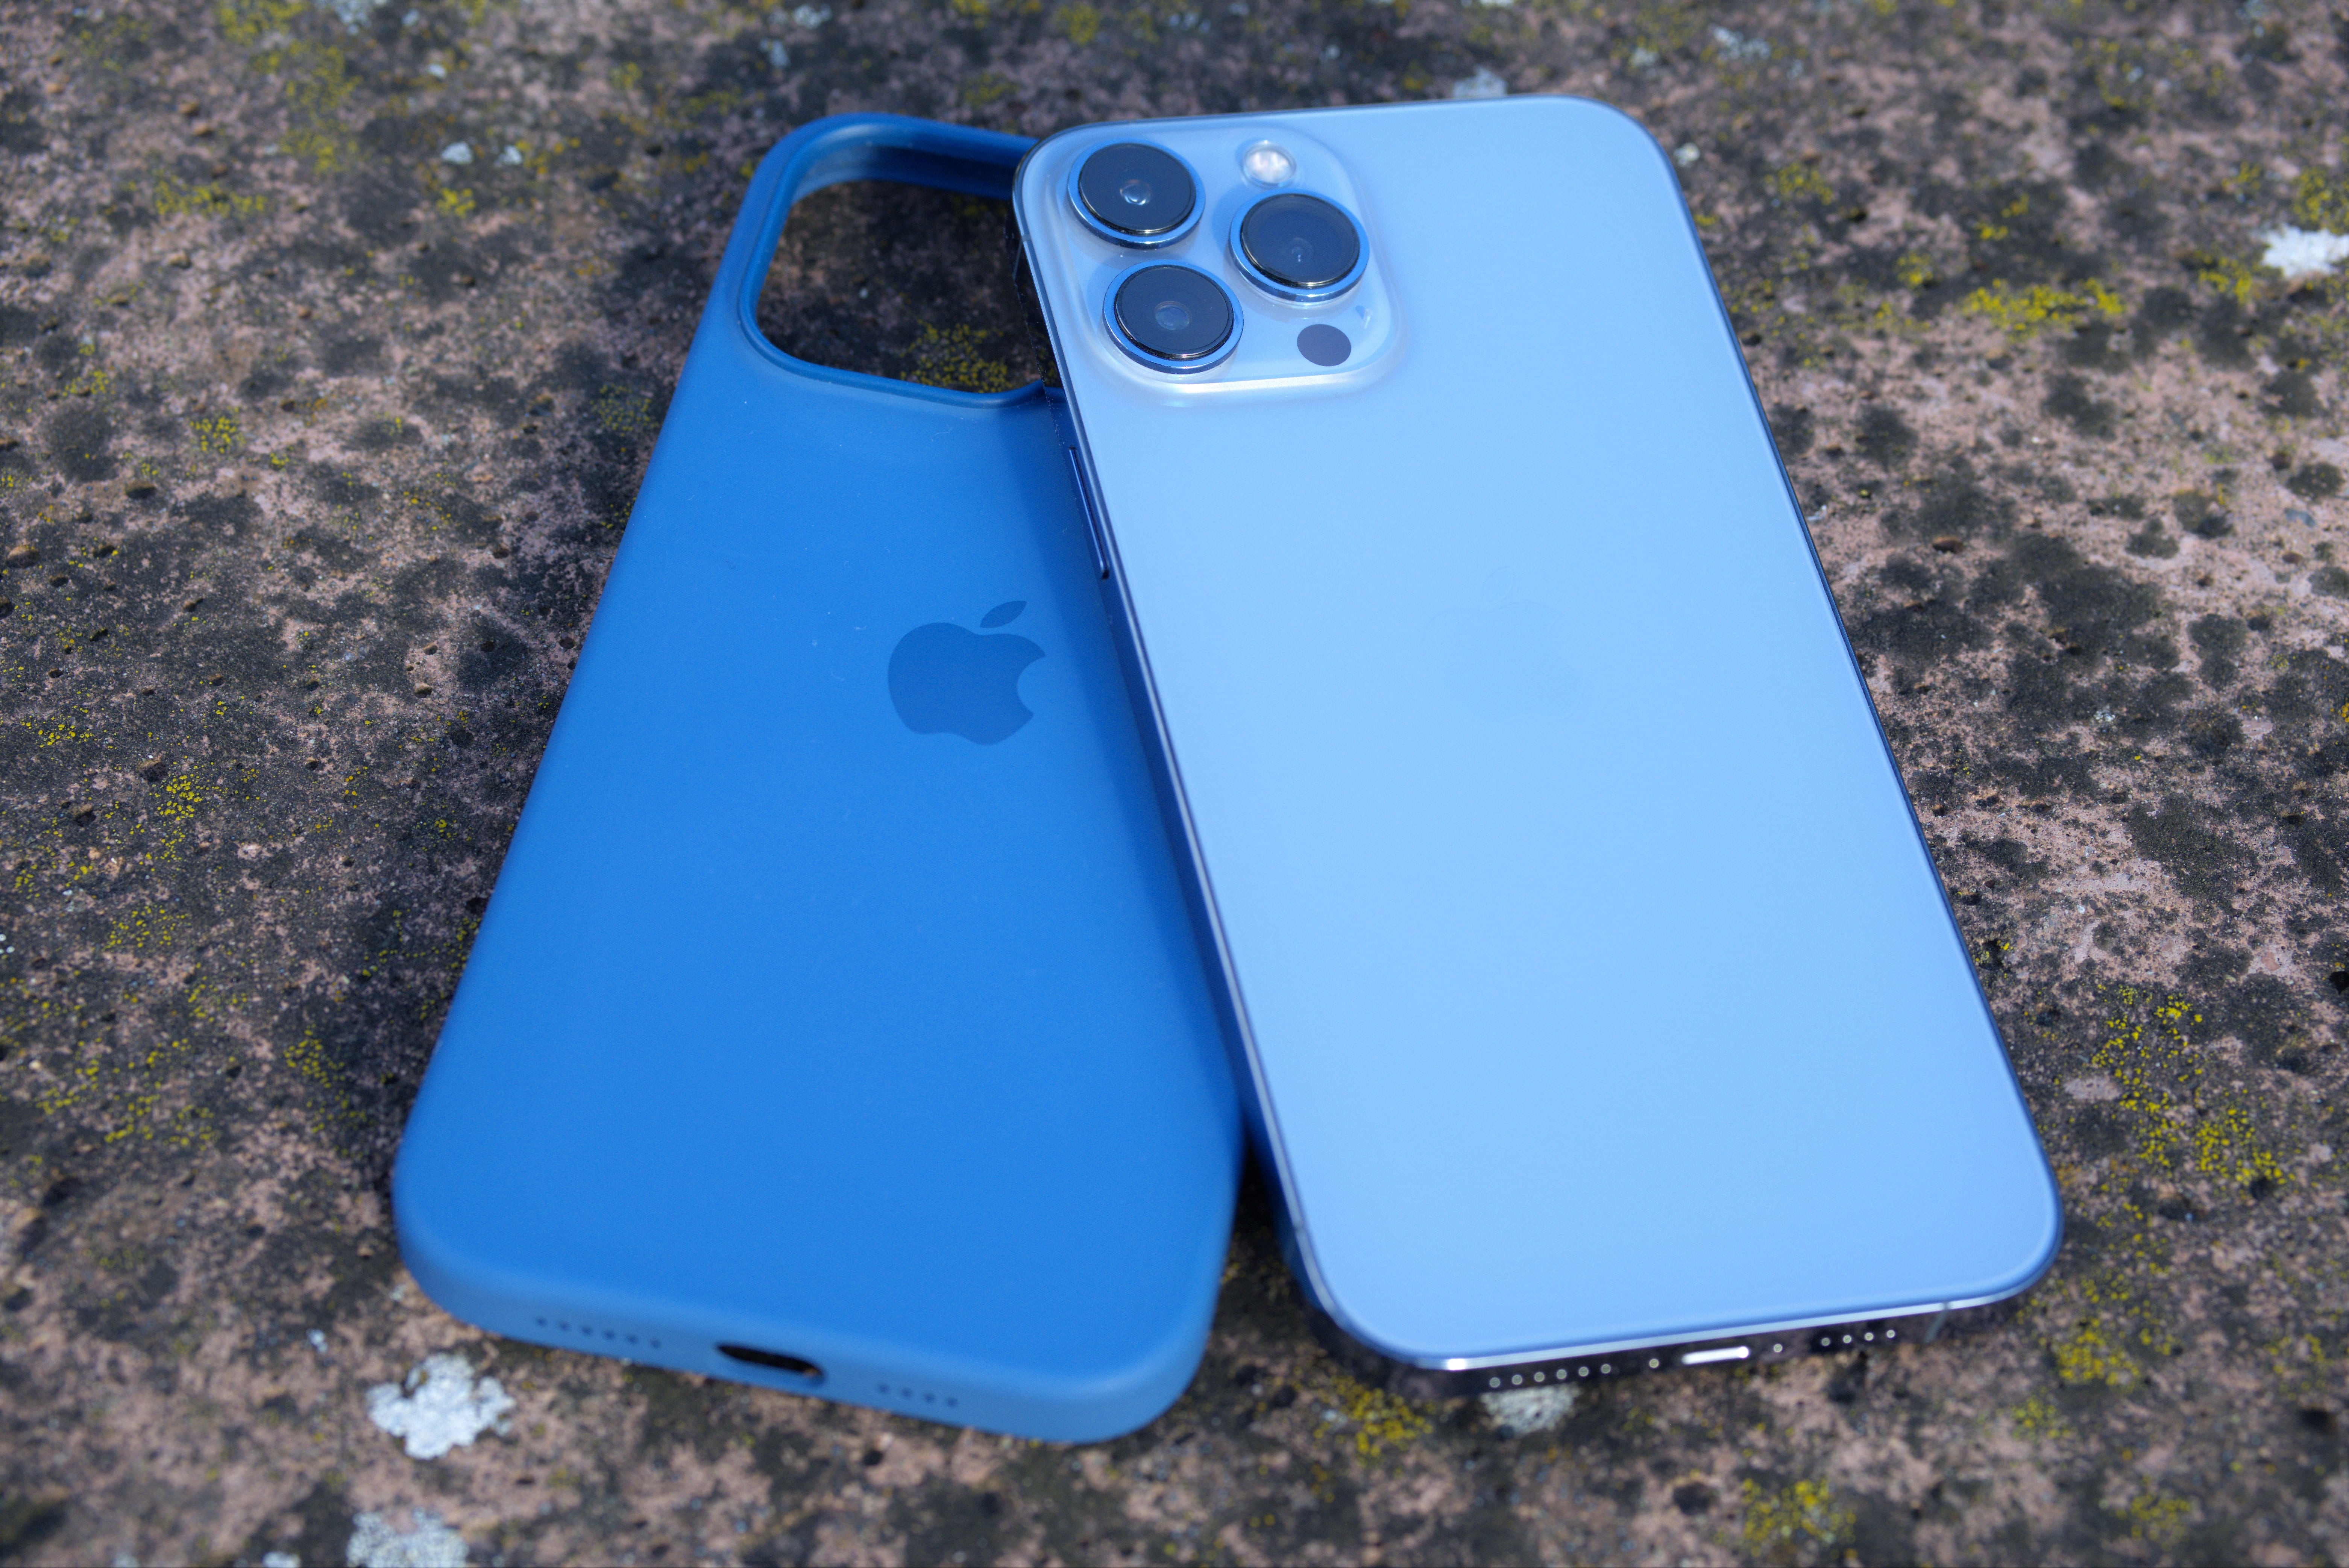 iPhone 13 Pro Max in Sierrablau + Silikon Case mit MagSafe in Eisblau